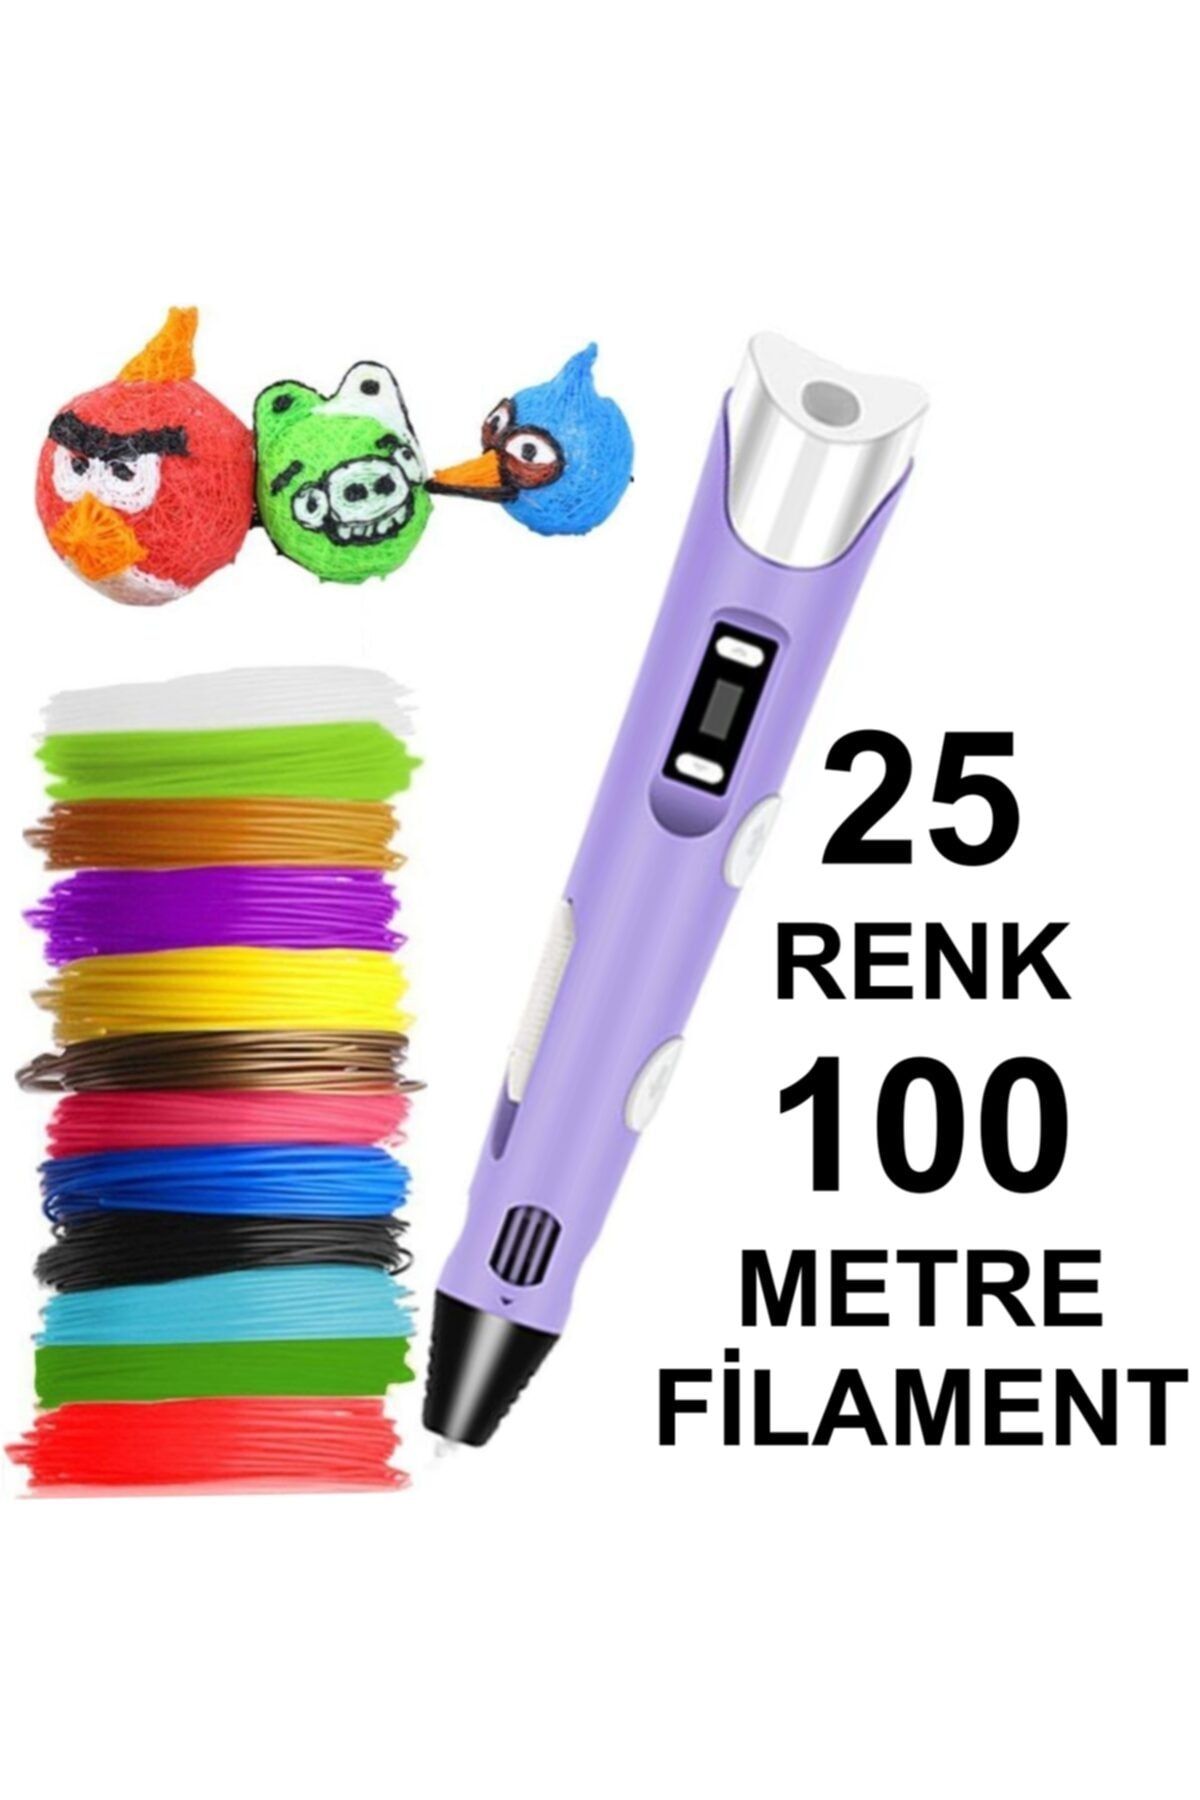 3D Mor Kalem Yazıcı+25 Renk 100 Metre (25x4metre) Pla Filament